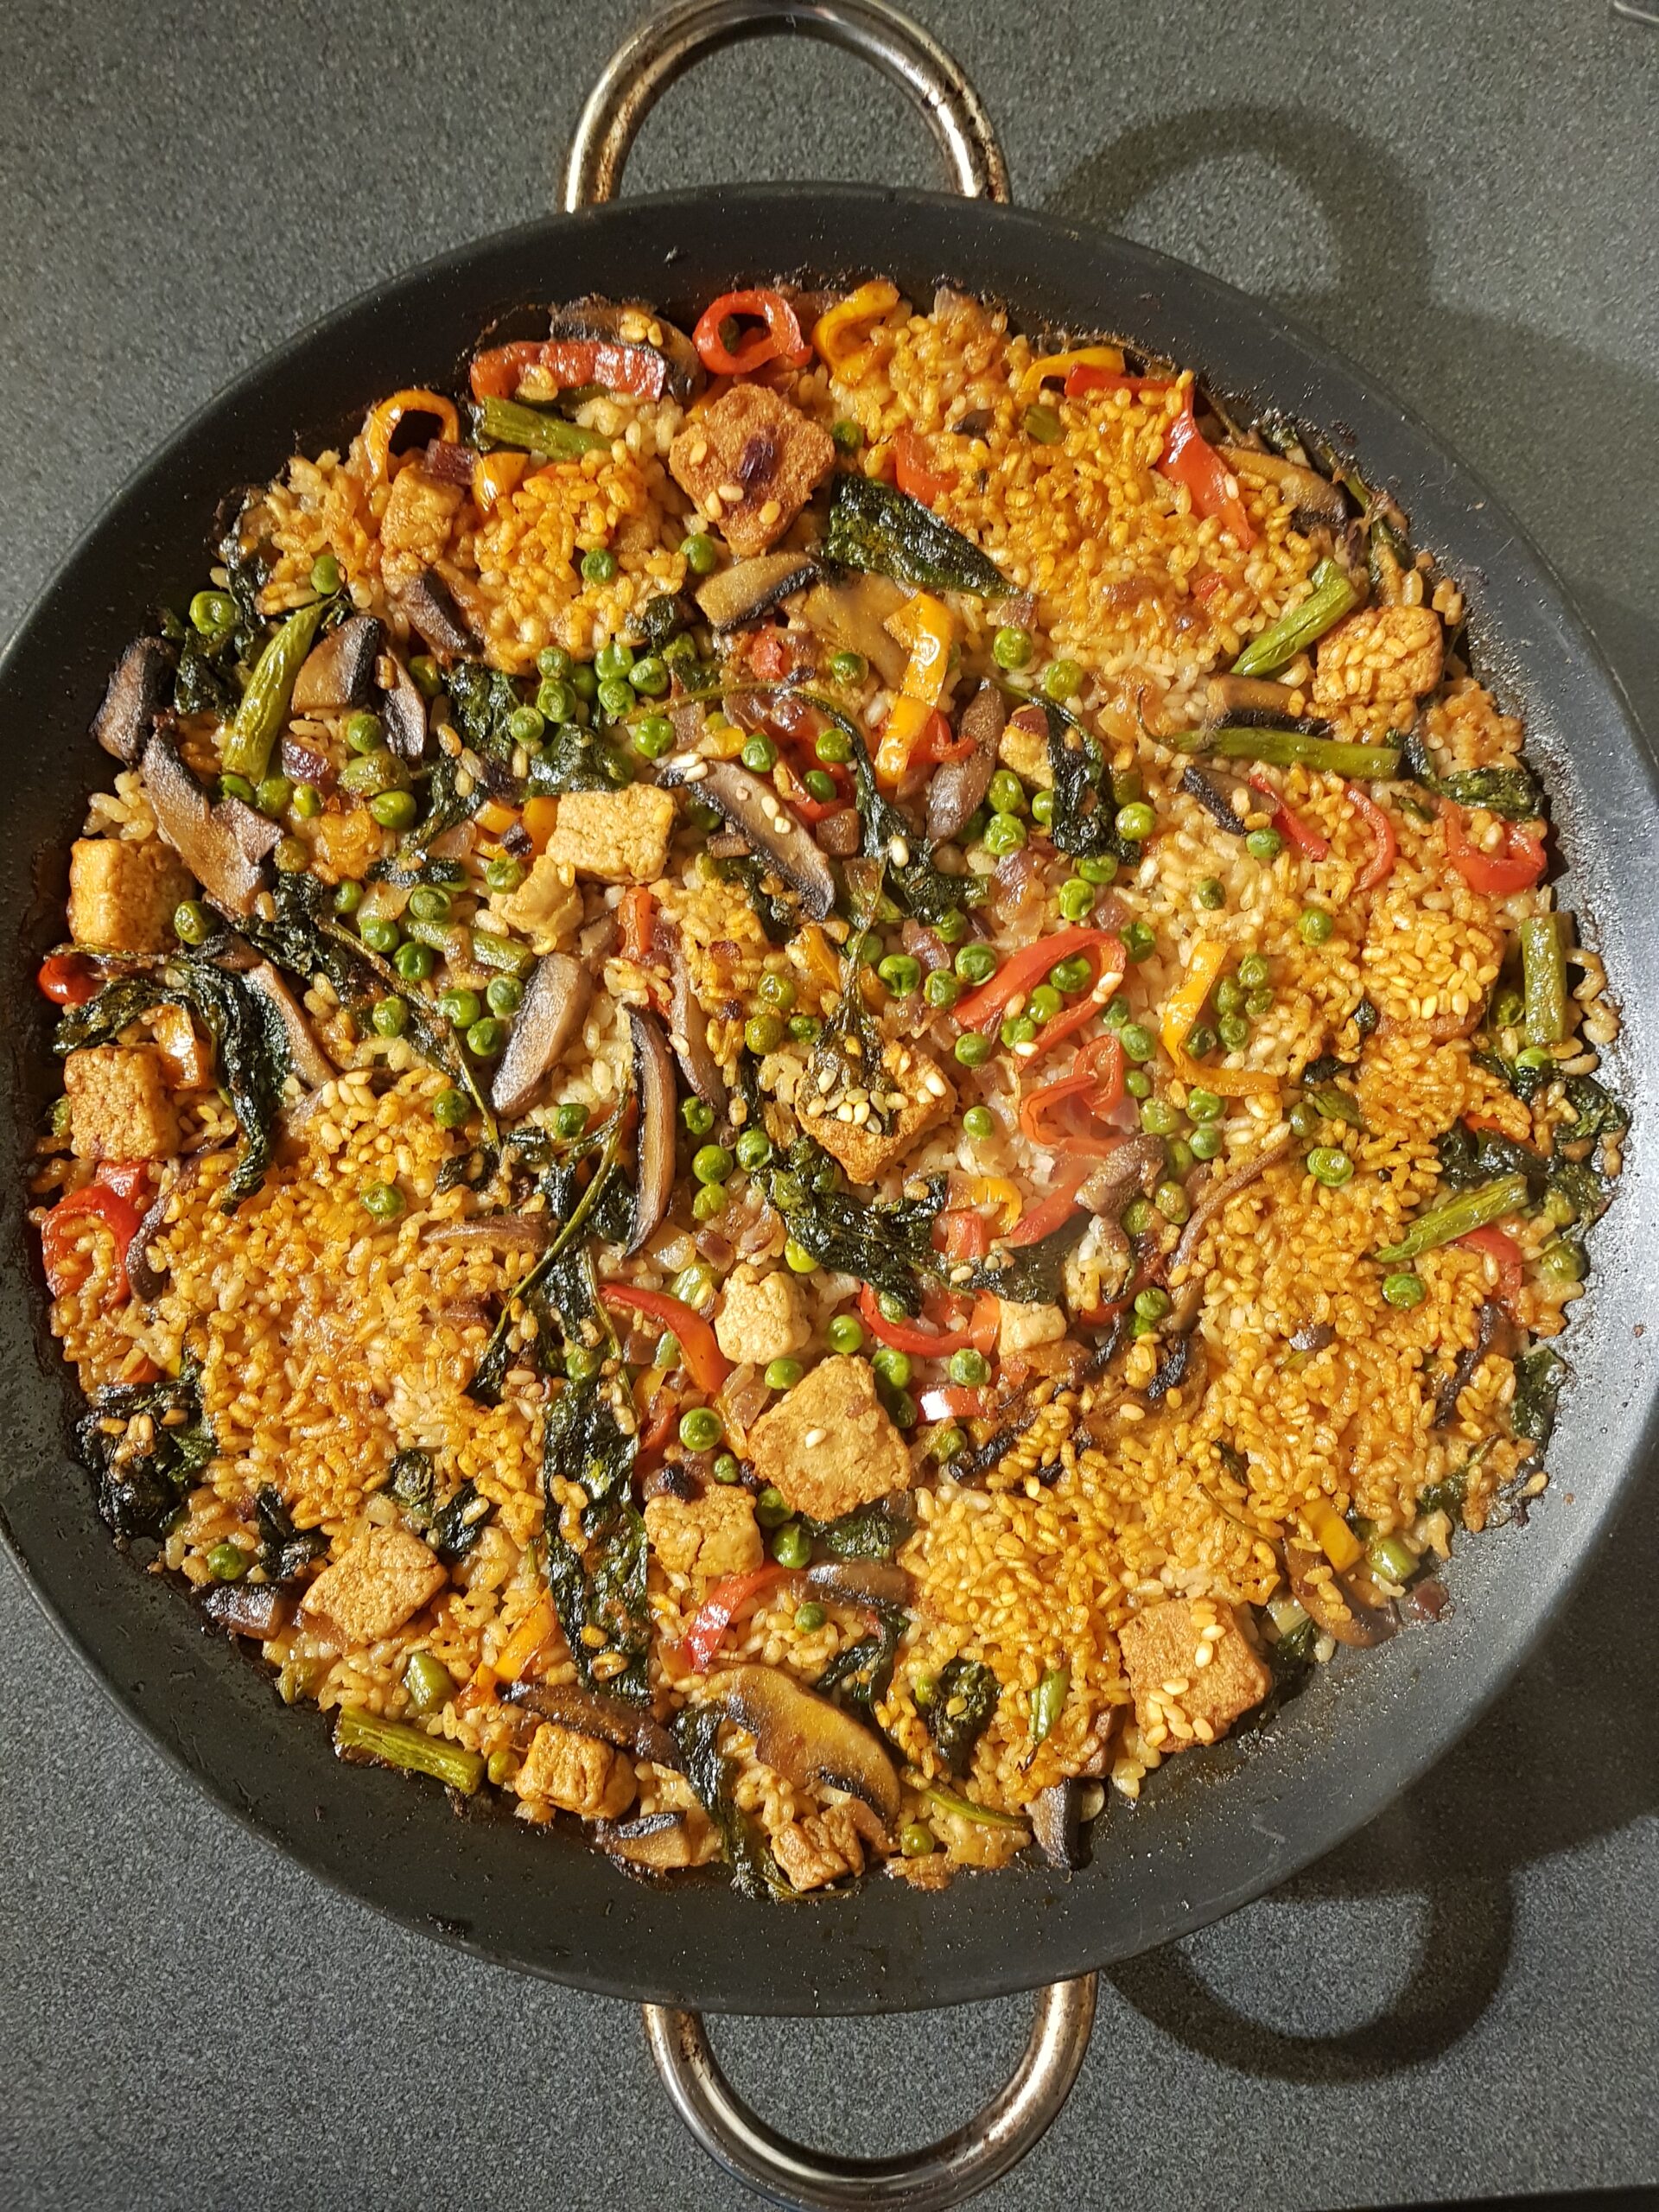 A dish of Vegan Paella with spicy paprika vegan sausages and mushrooms